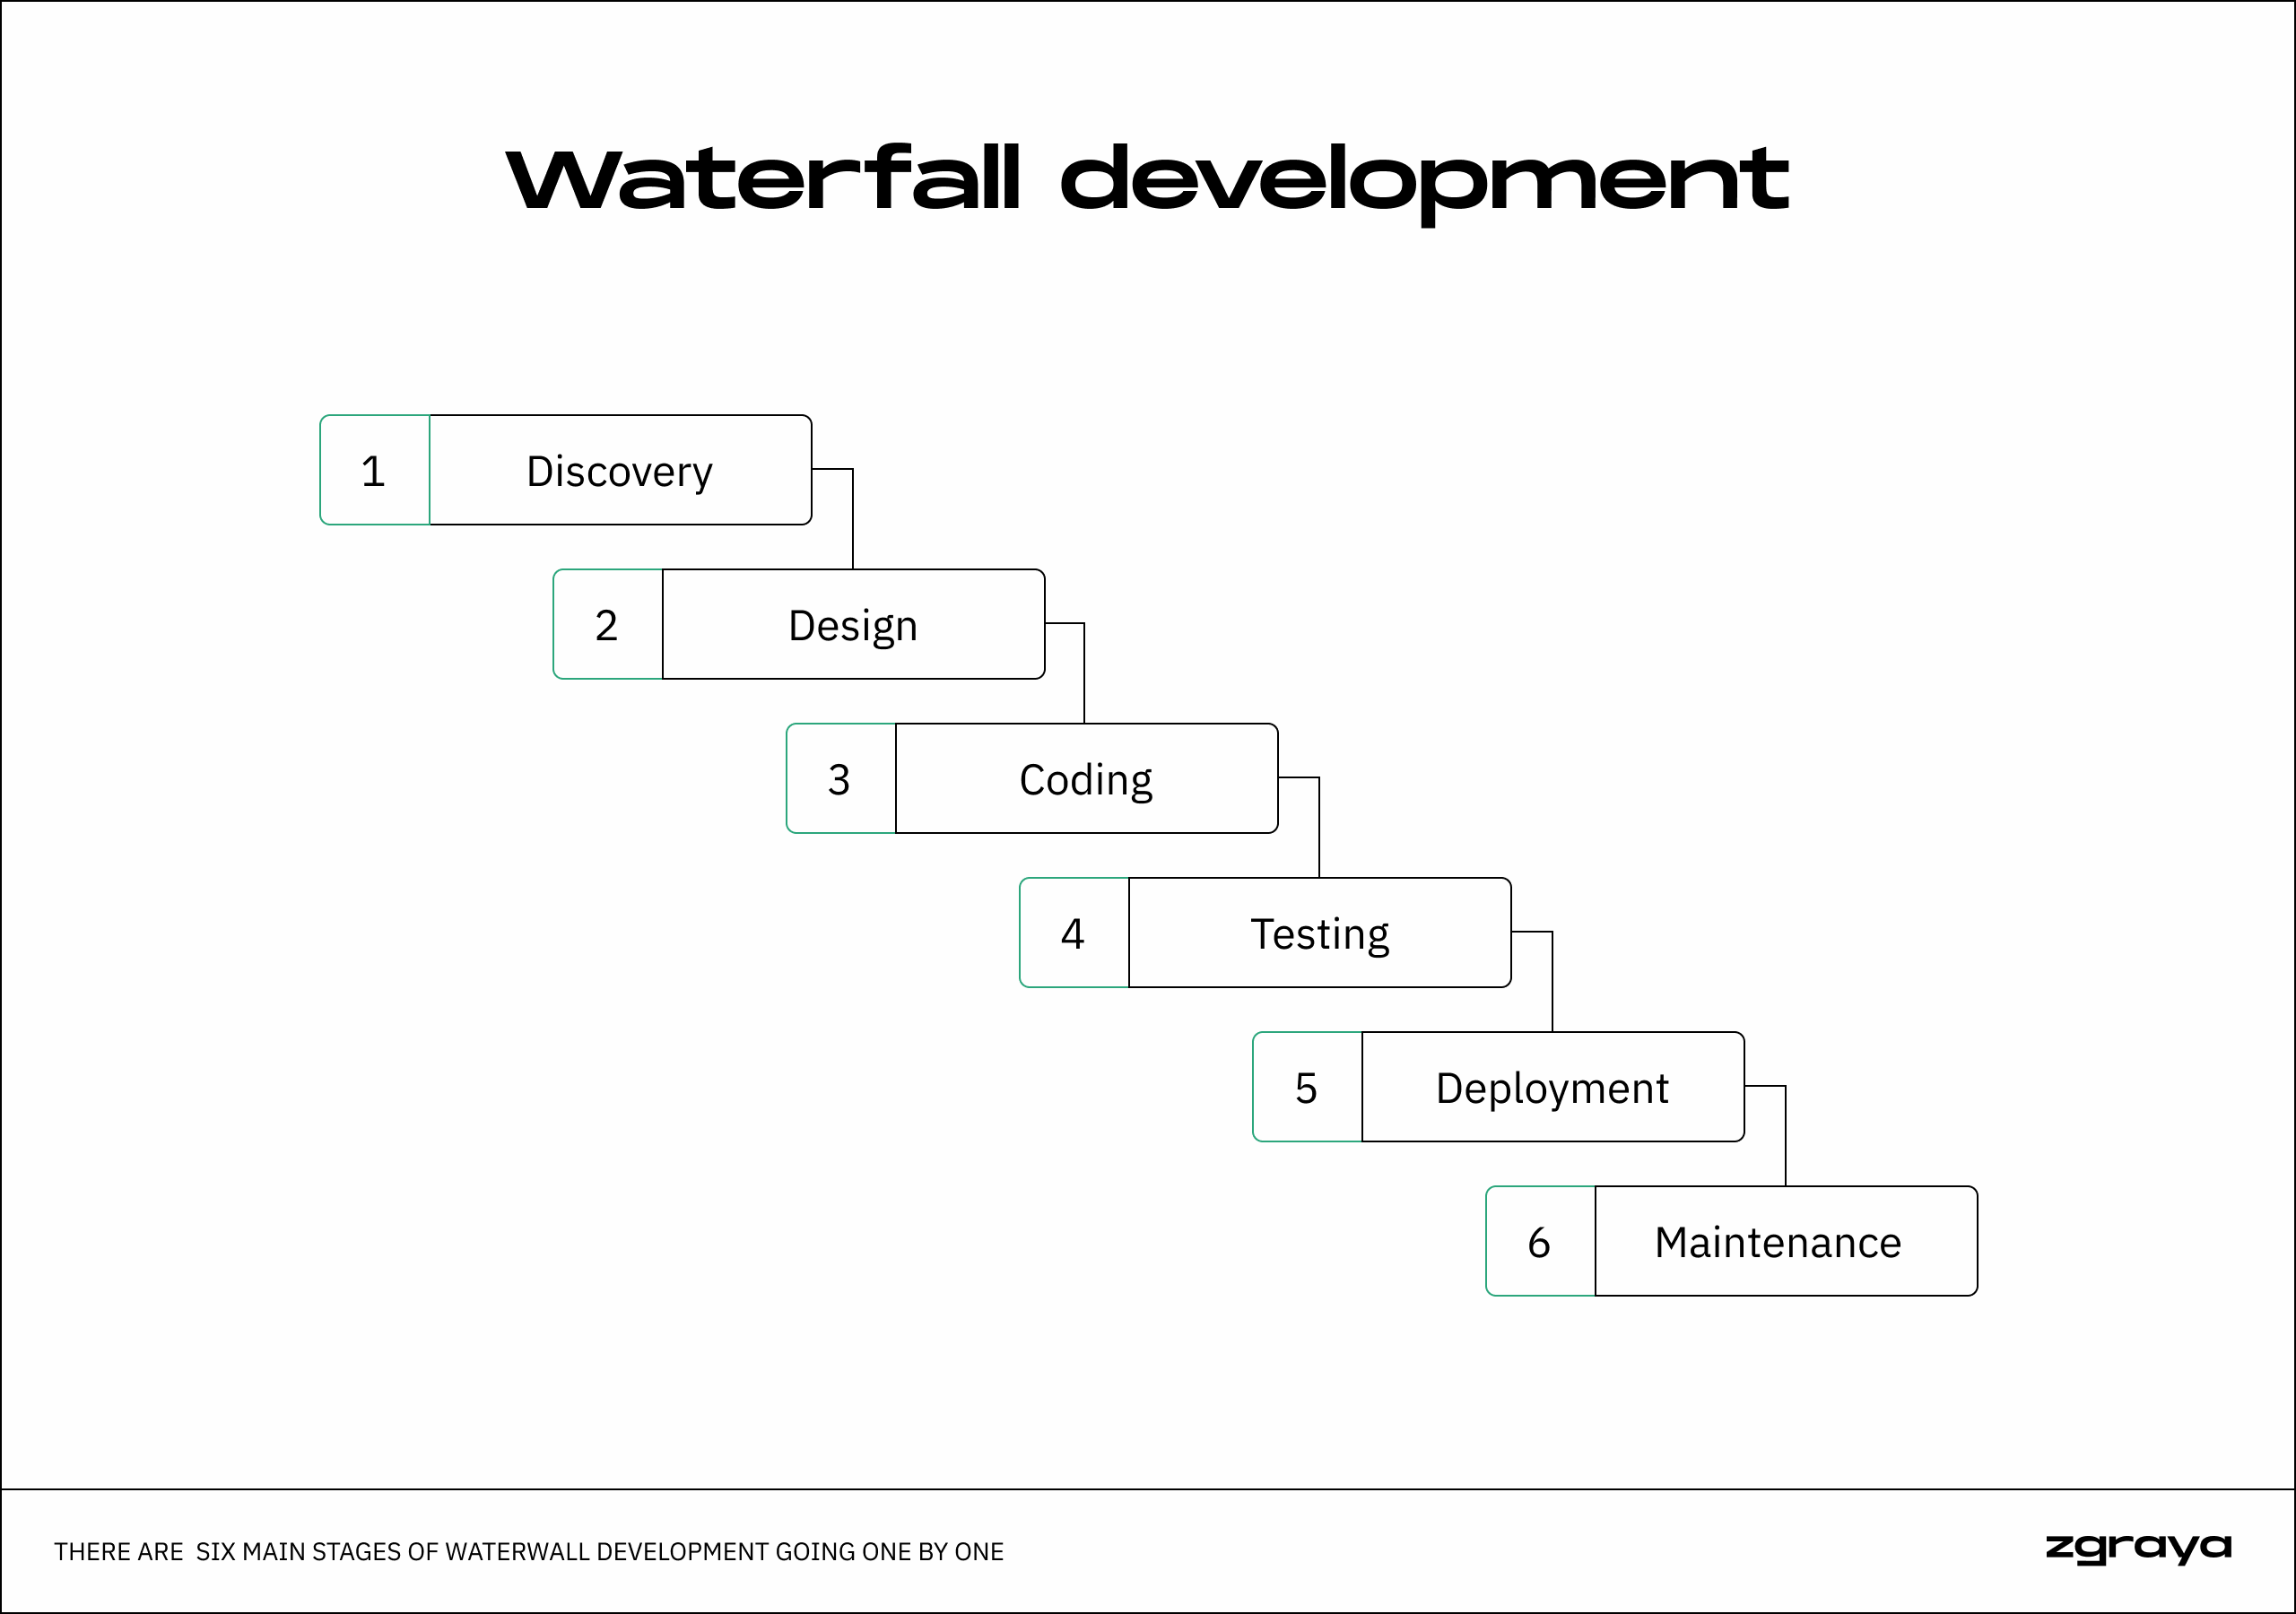 Waterfall development